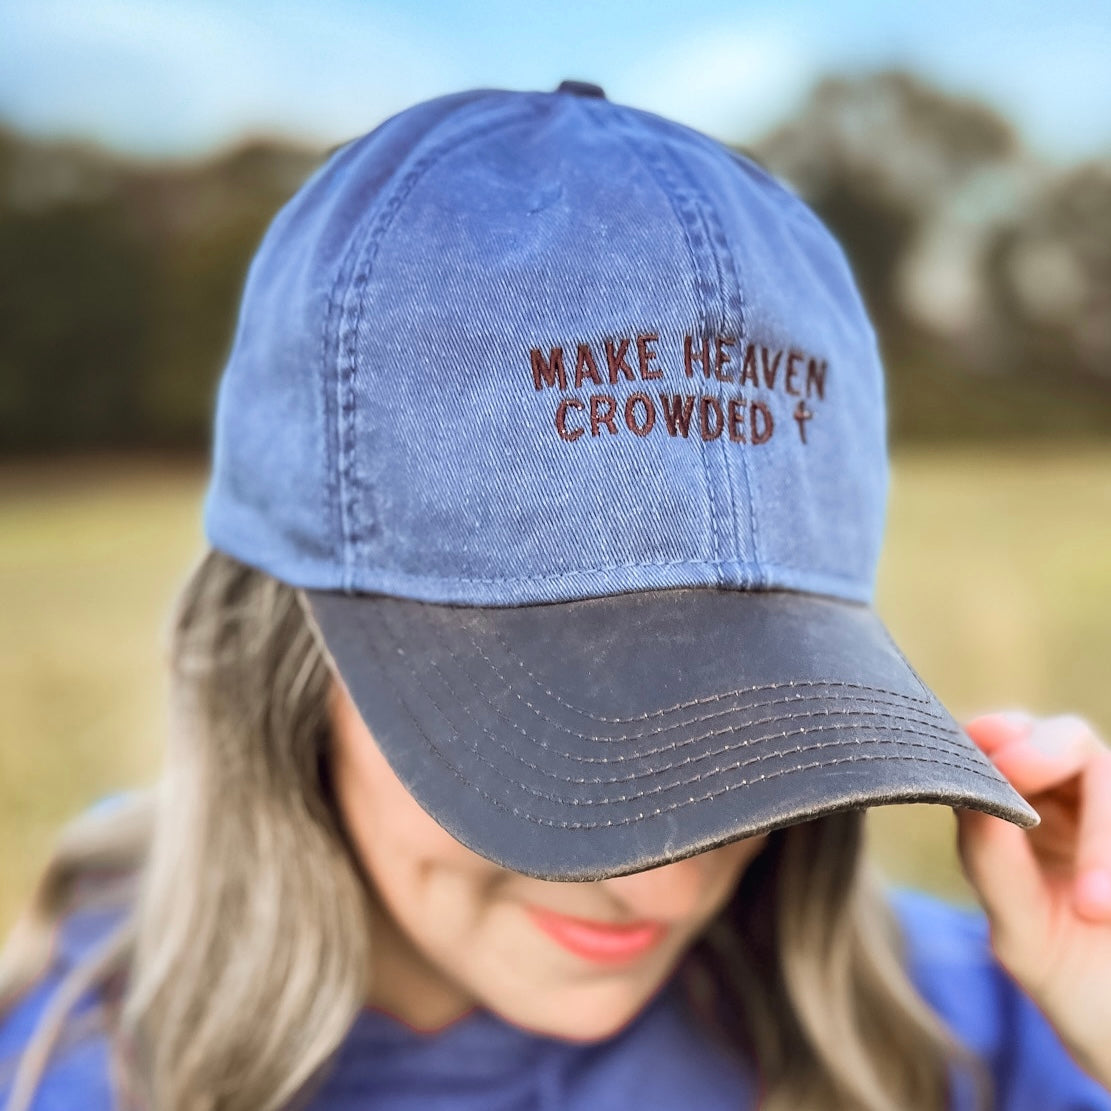 MAKE HEAVEN CROWDED - Hats